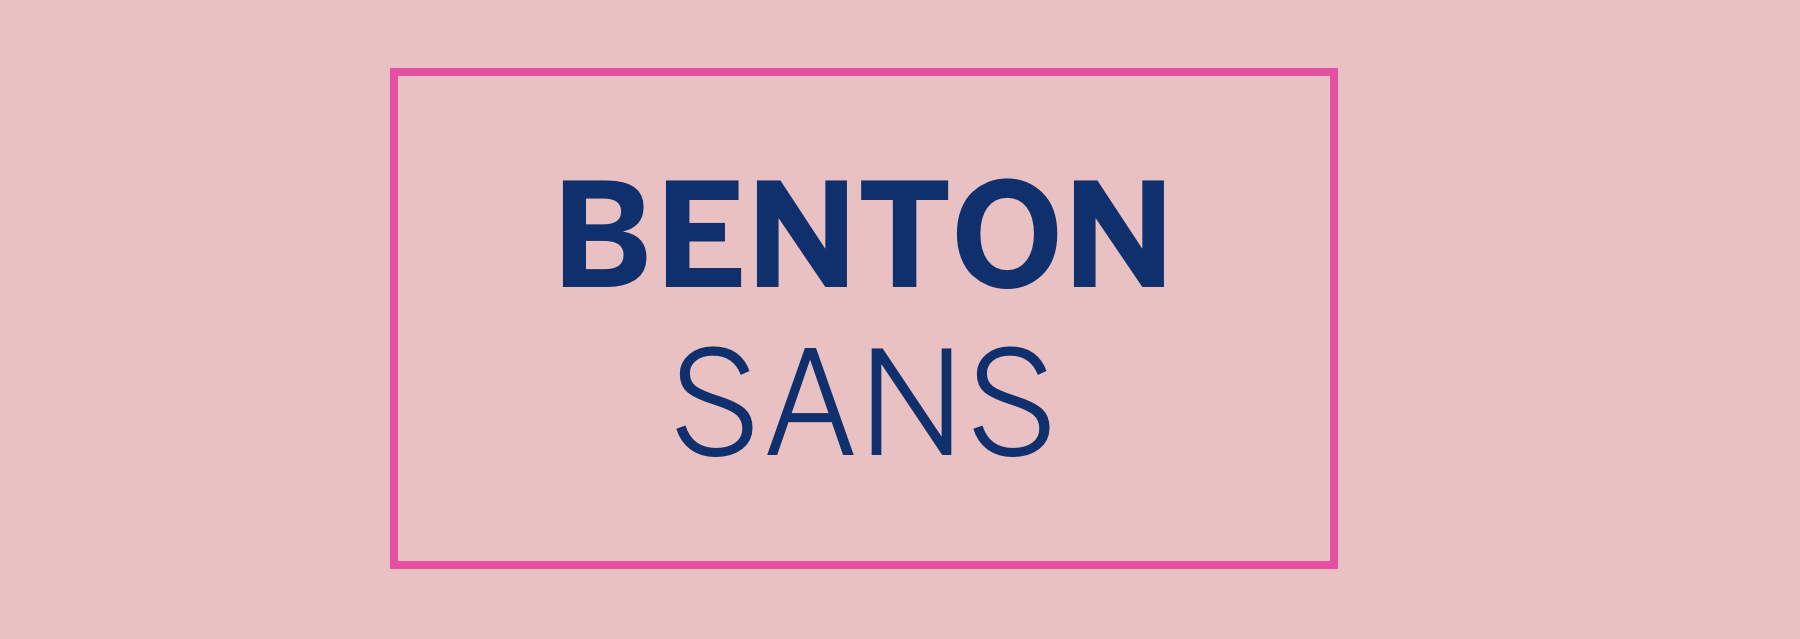 Benton Sans : A type specimen. 01. Project | by Nikki Espiritu | Medium